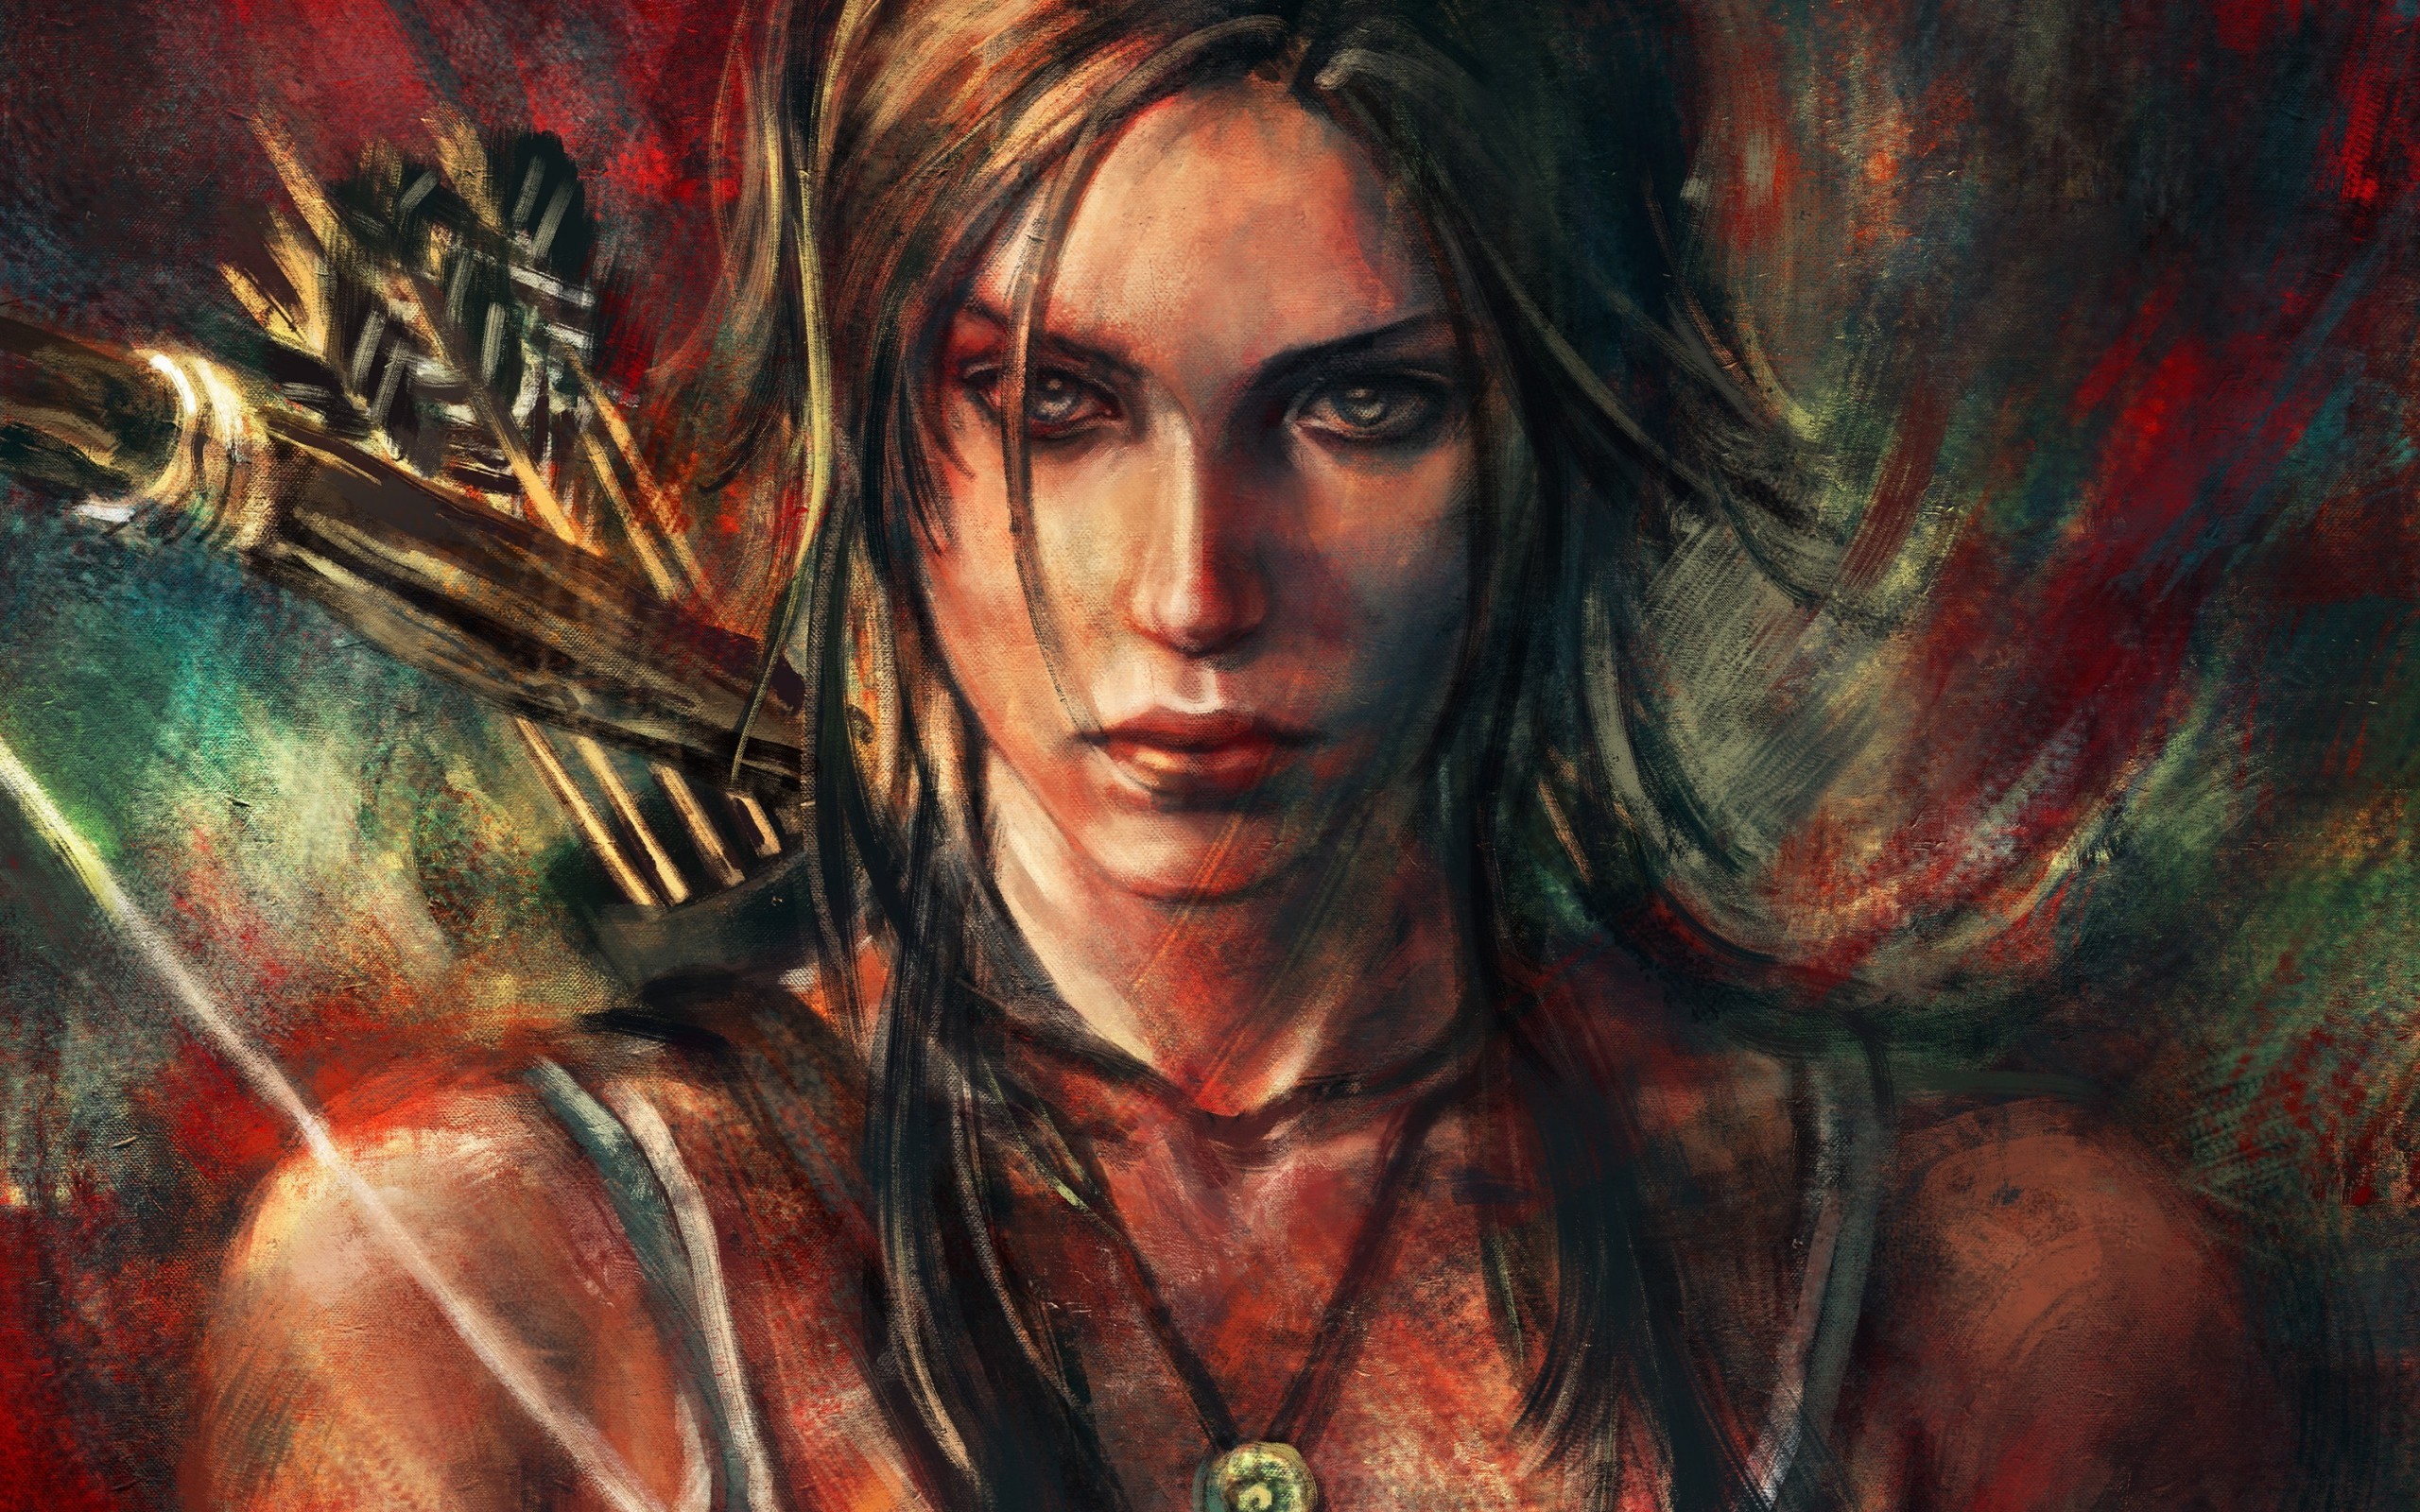 Descarga gratuita de fondo de pantalla para móvil de Tomb Raider, Videojuego.